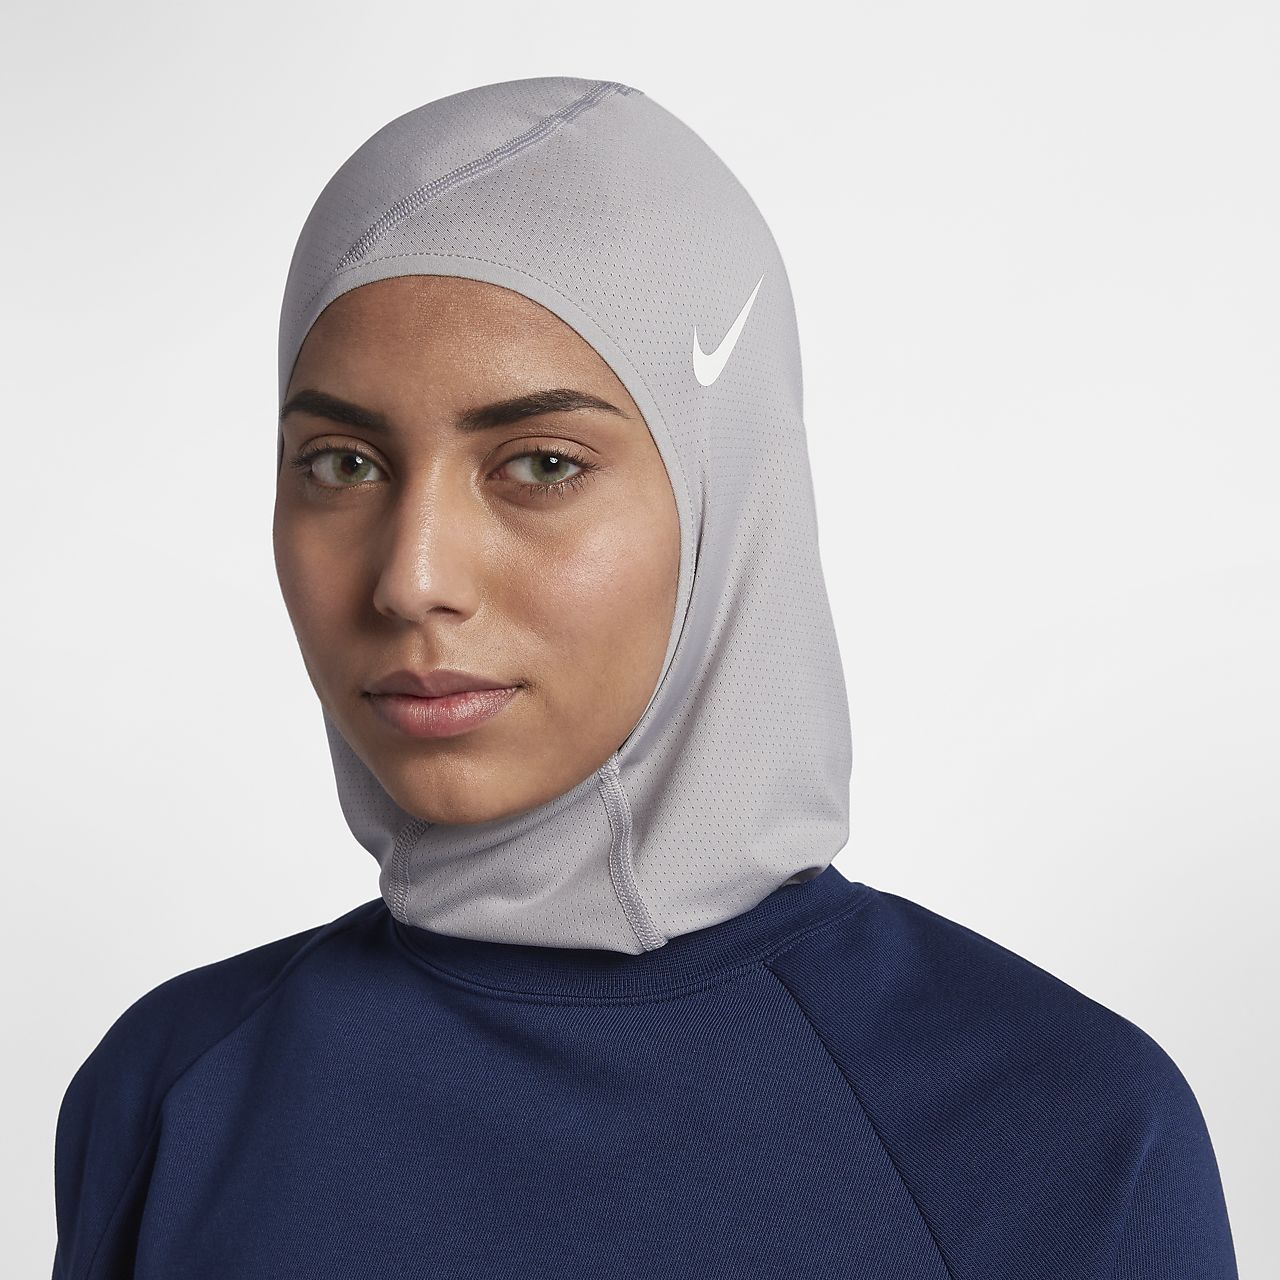  Nike  Pro Women s Hijab Nike  com GB